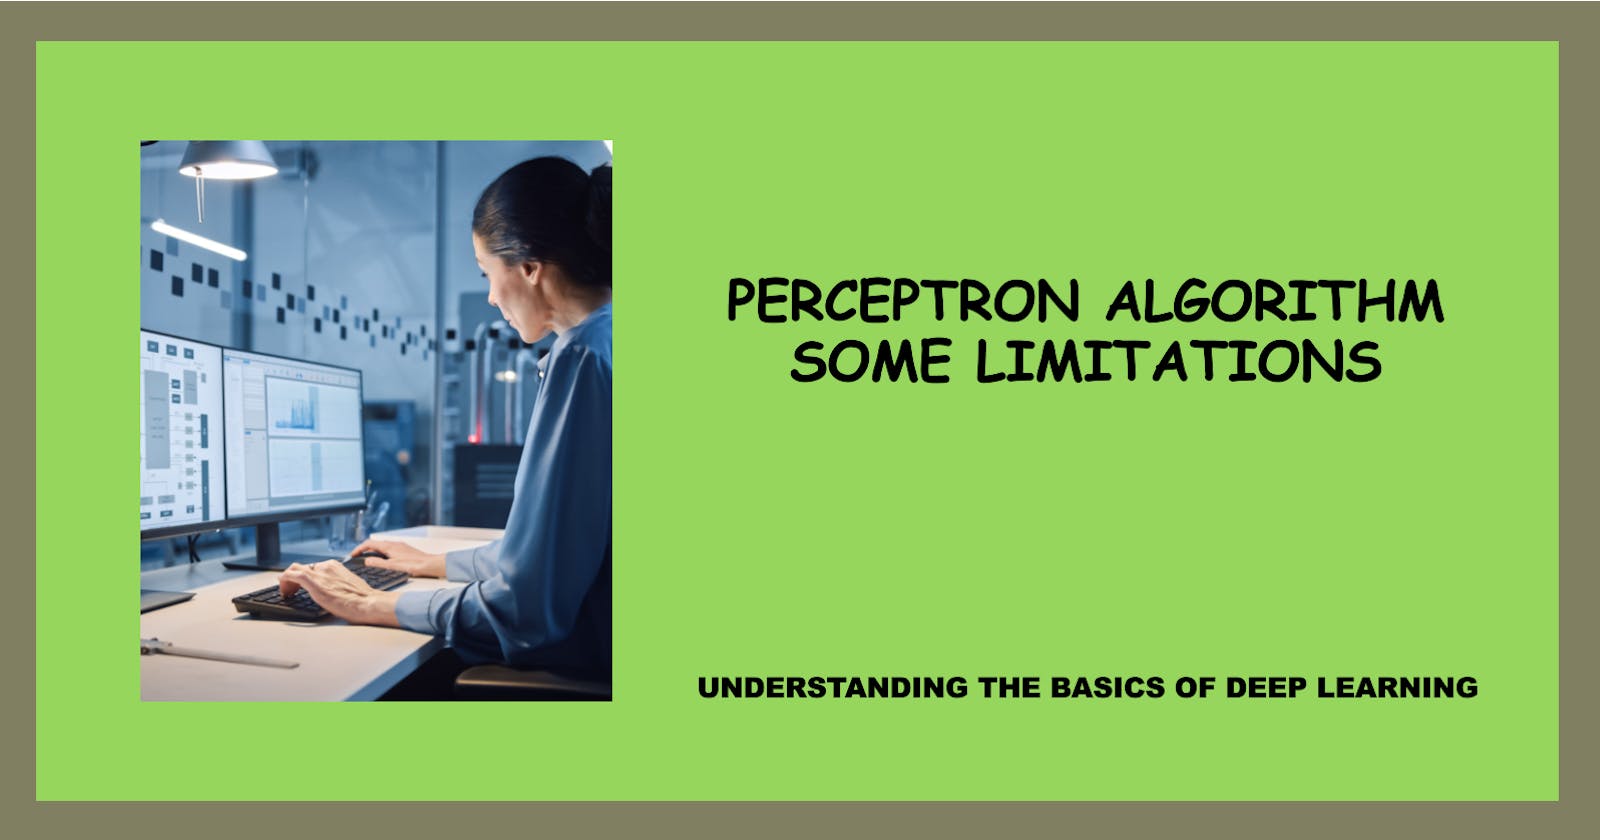 The perceptron algorithm - some limitations